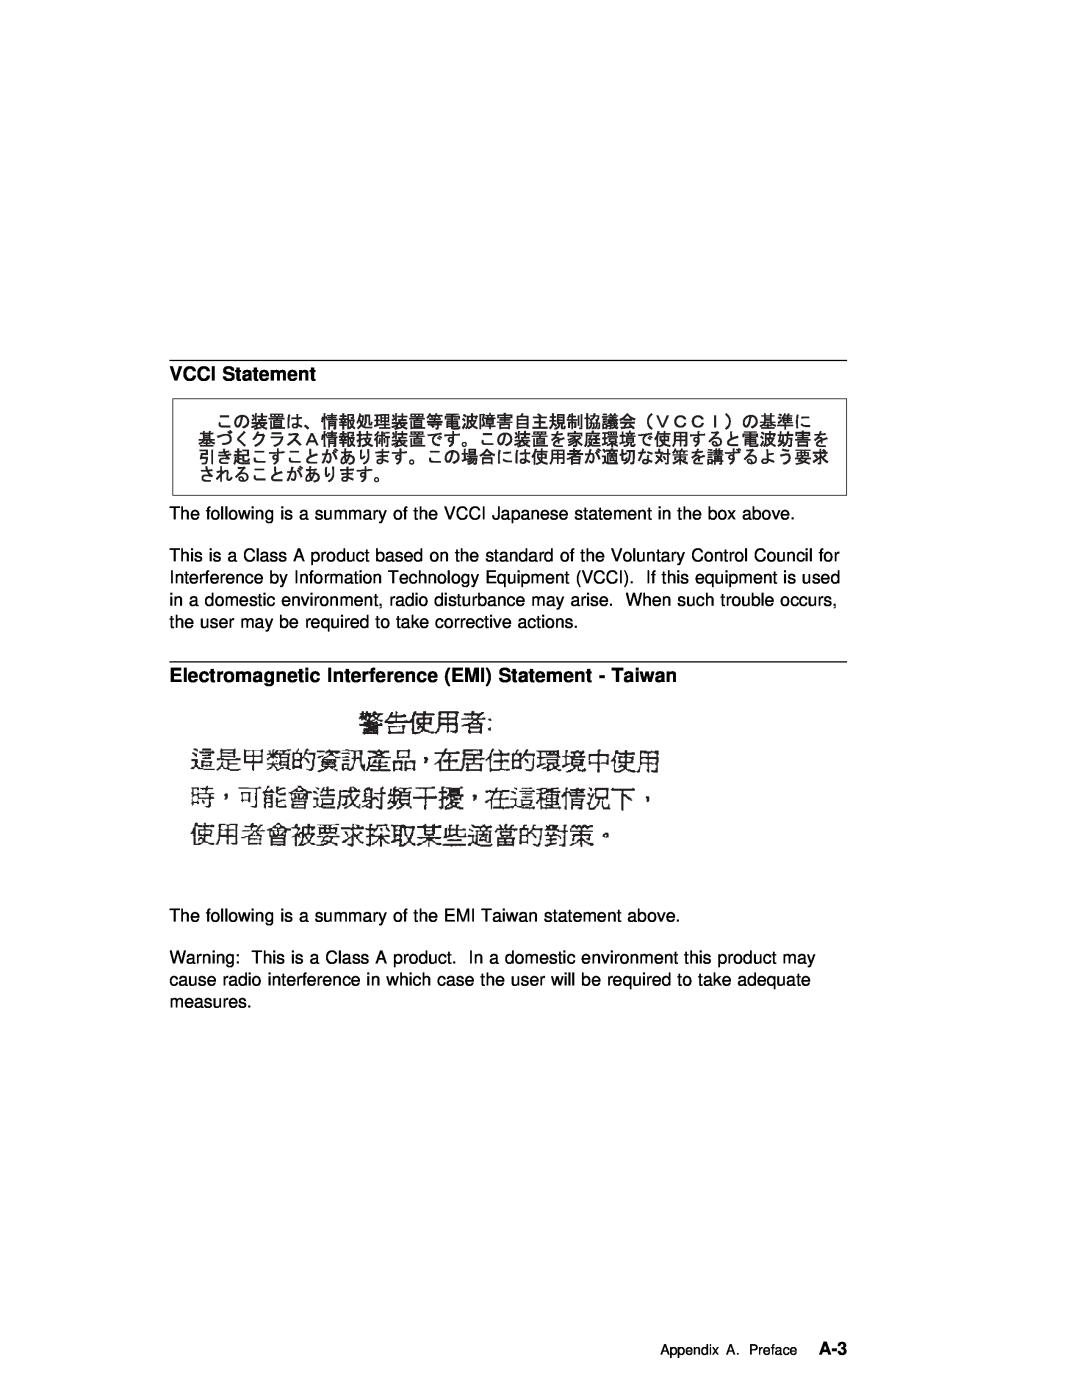 IBM ARTIC960RxD manual VCCI Statement, Electromagnetic Interference EMI Statement - Taiwan, Appendix A. PrefaceA-3 